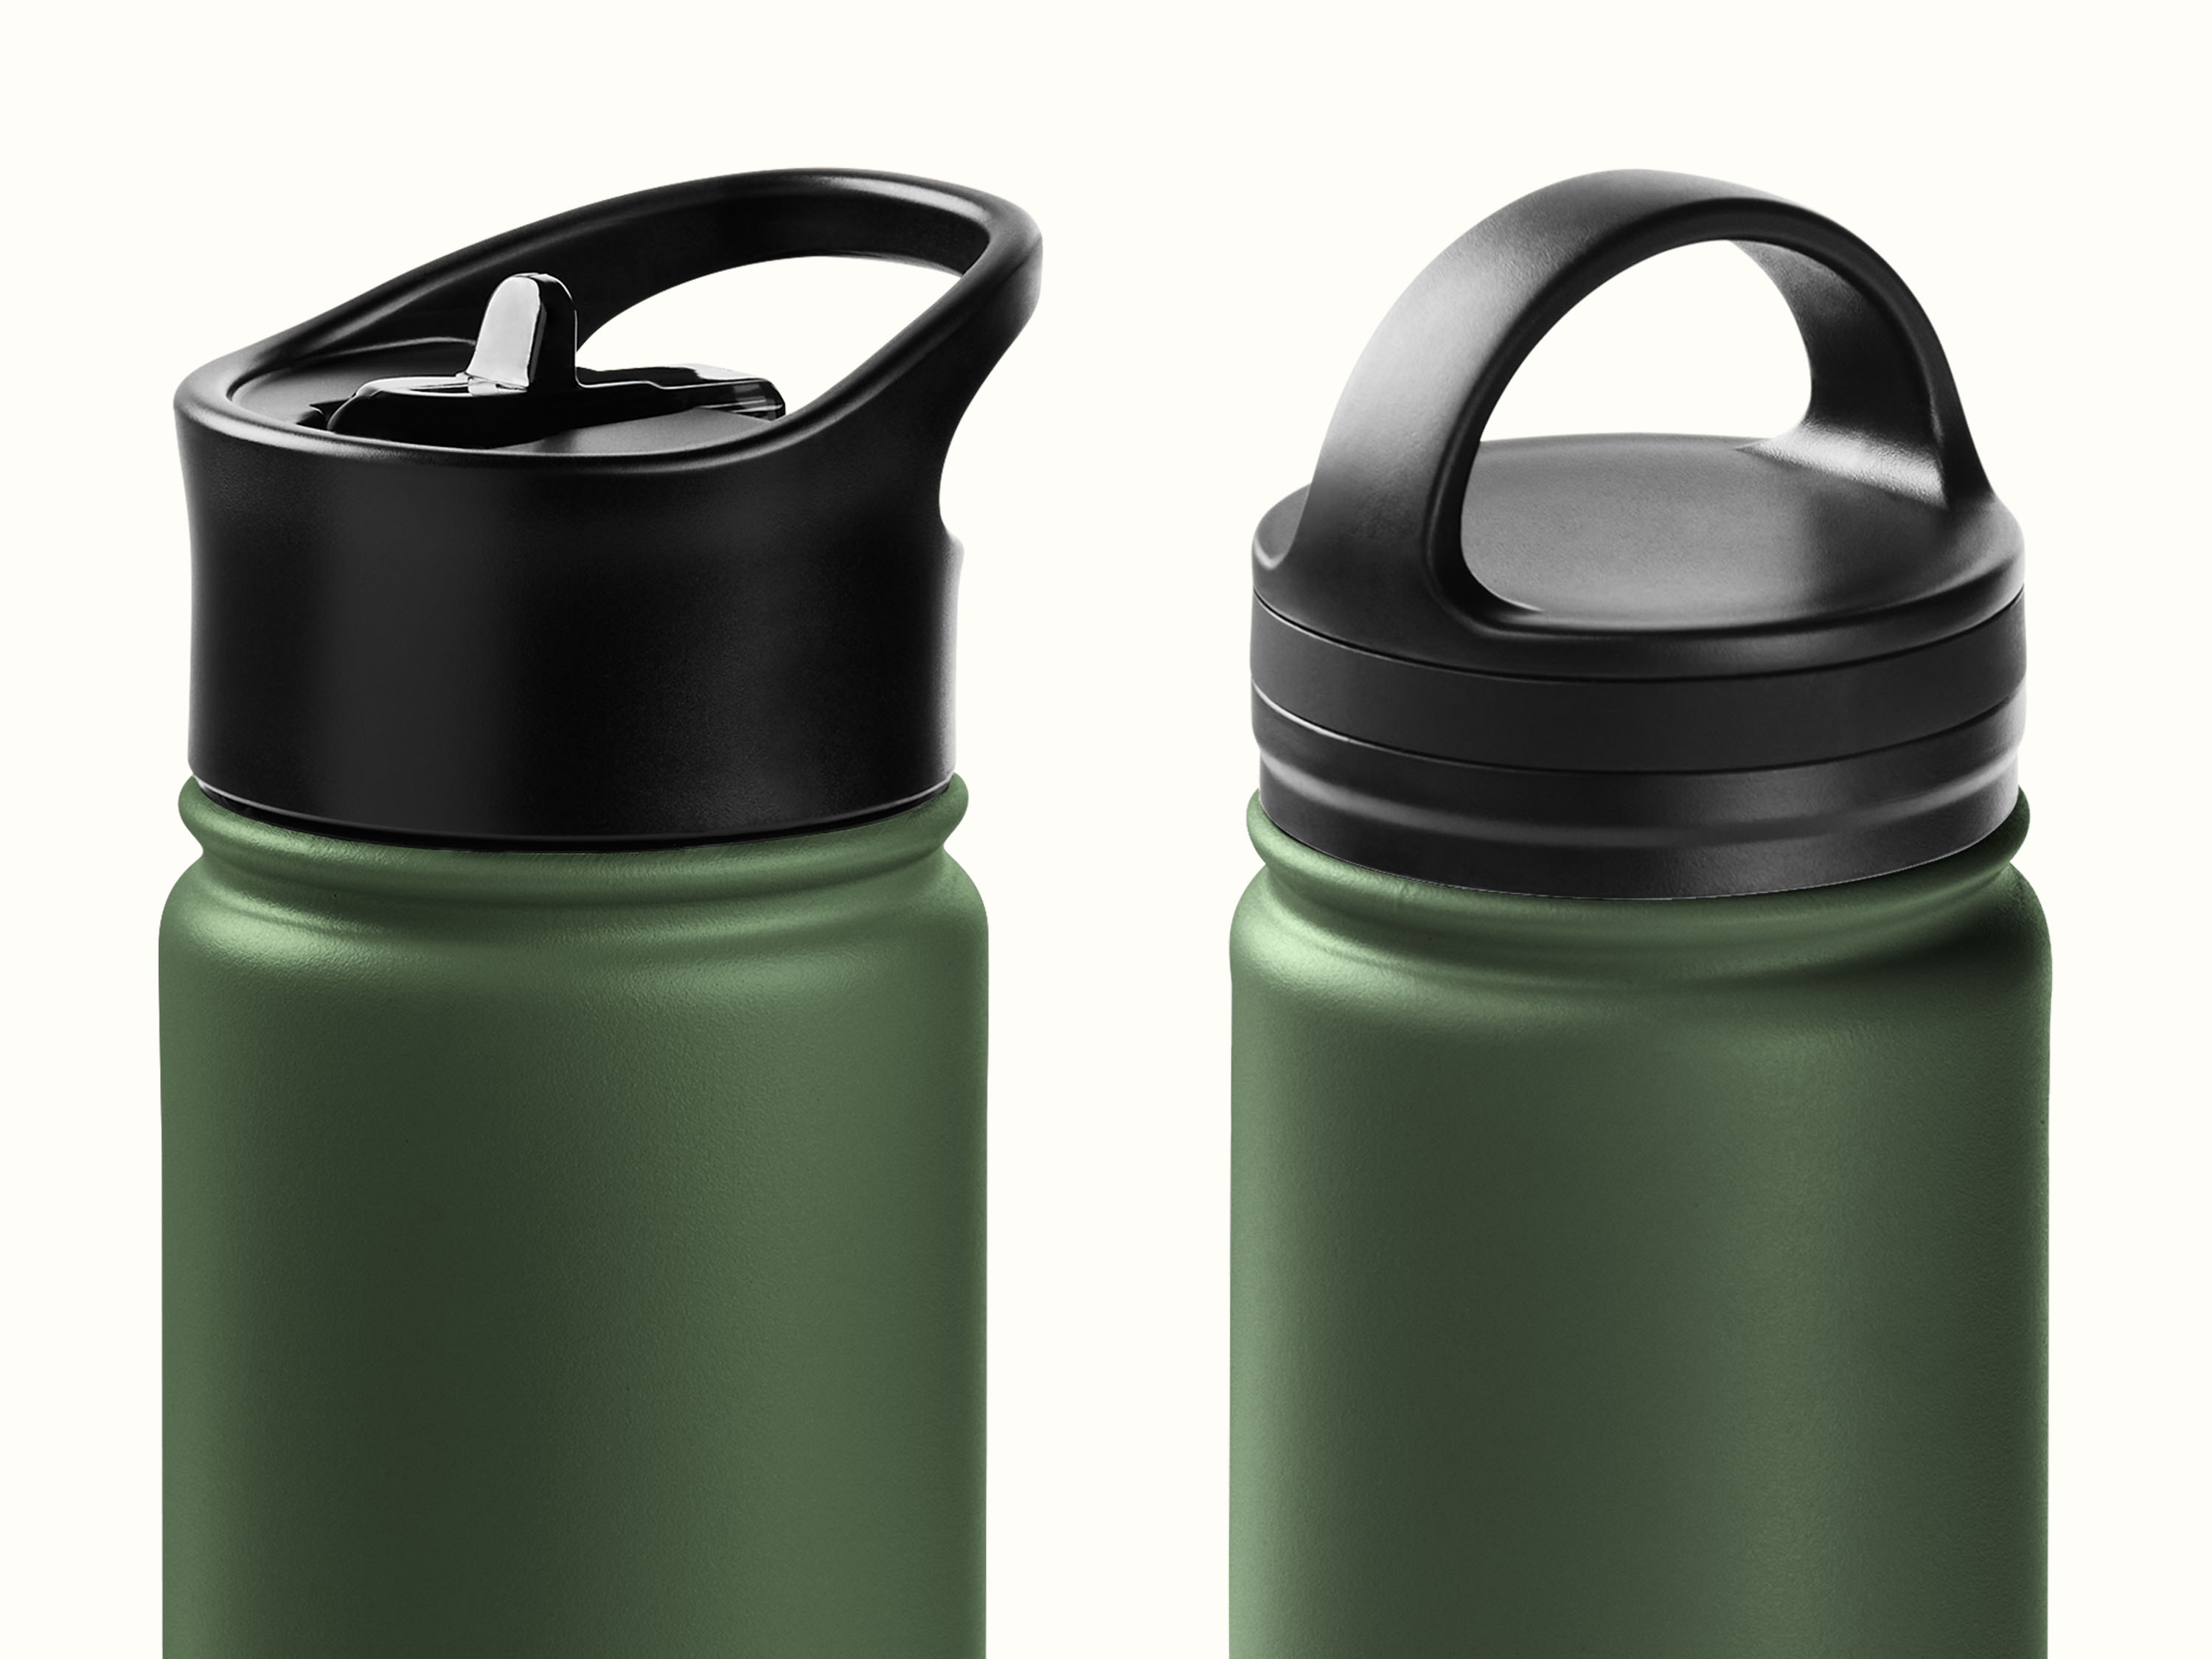 Waterdrop Thermo Steel Bottle - Mirror - 34 oz - Stainless Steel Water Bottle - Insulated Bottle - Plastic Free Water Bottle - Sustainable